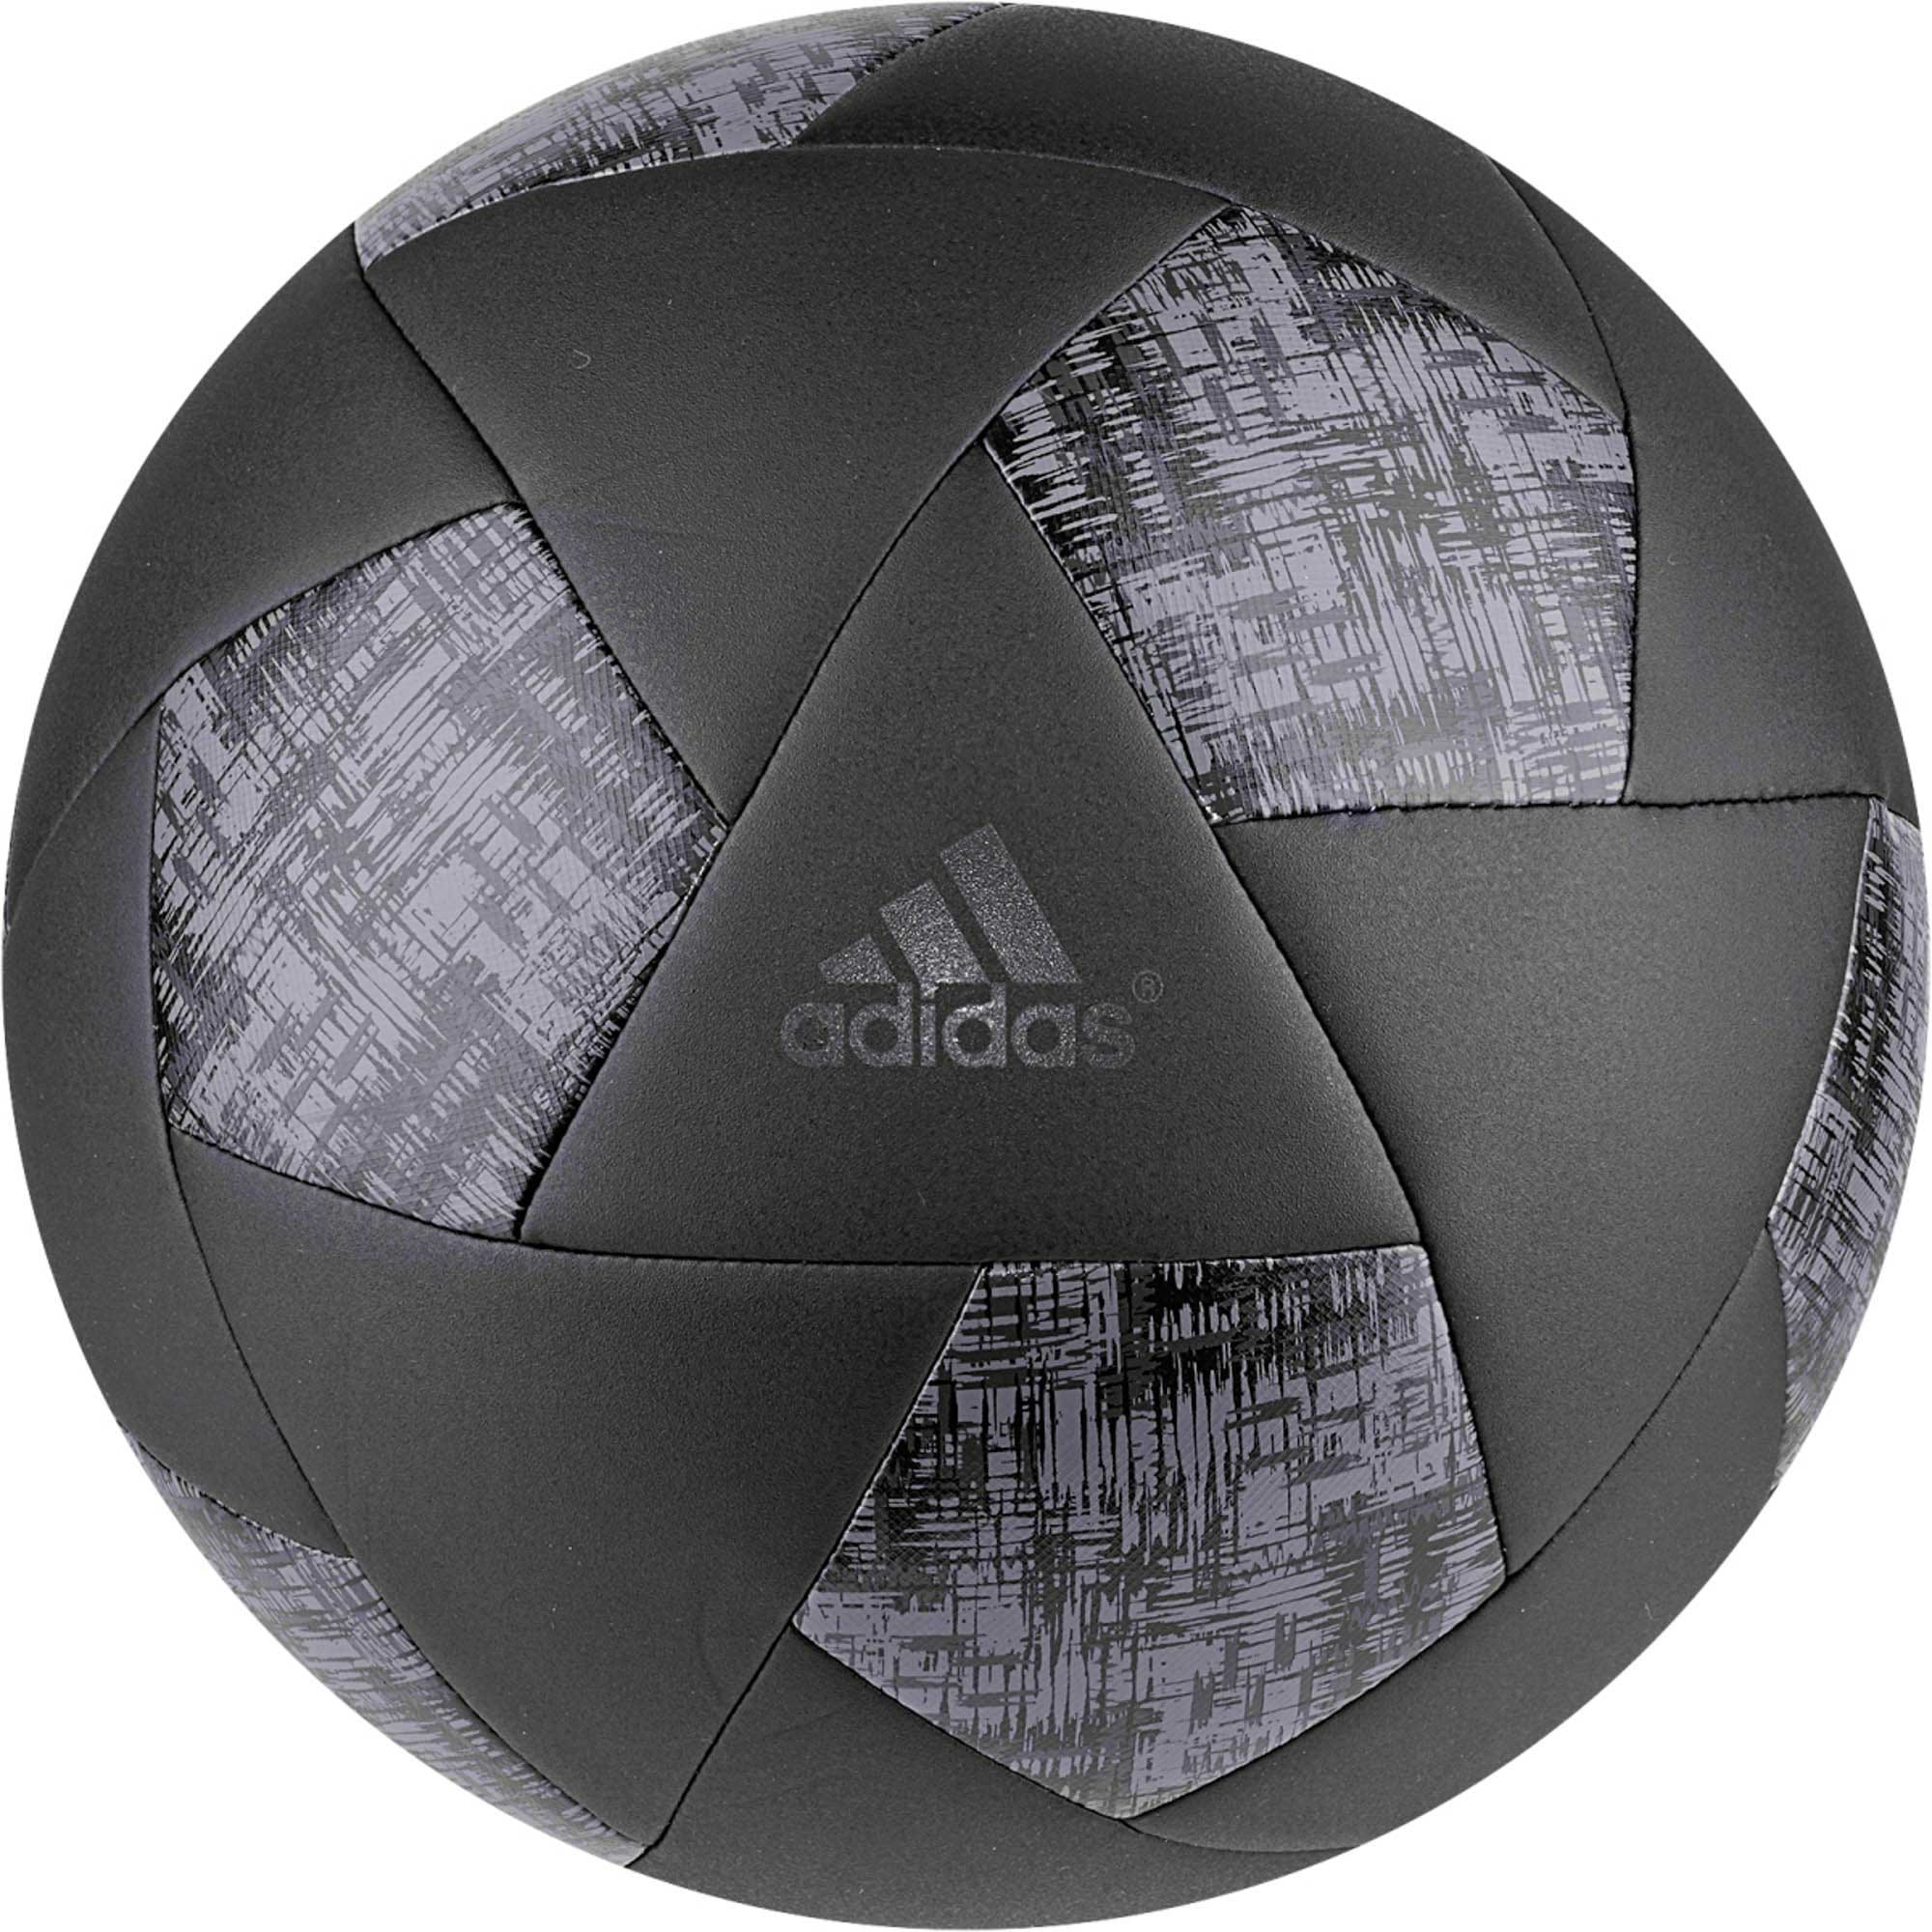 black adidas soccer ball